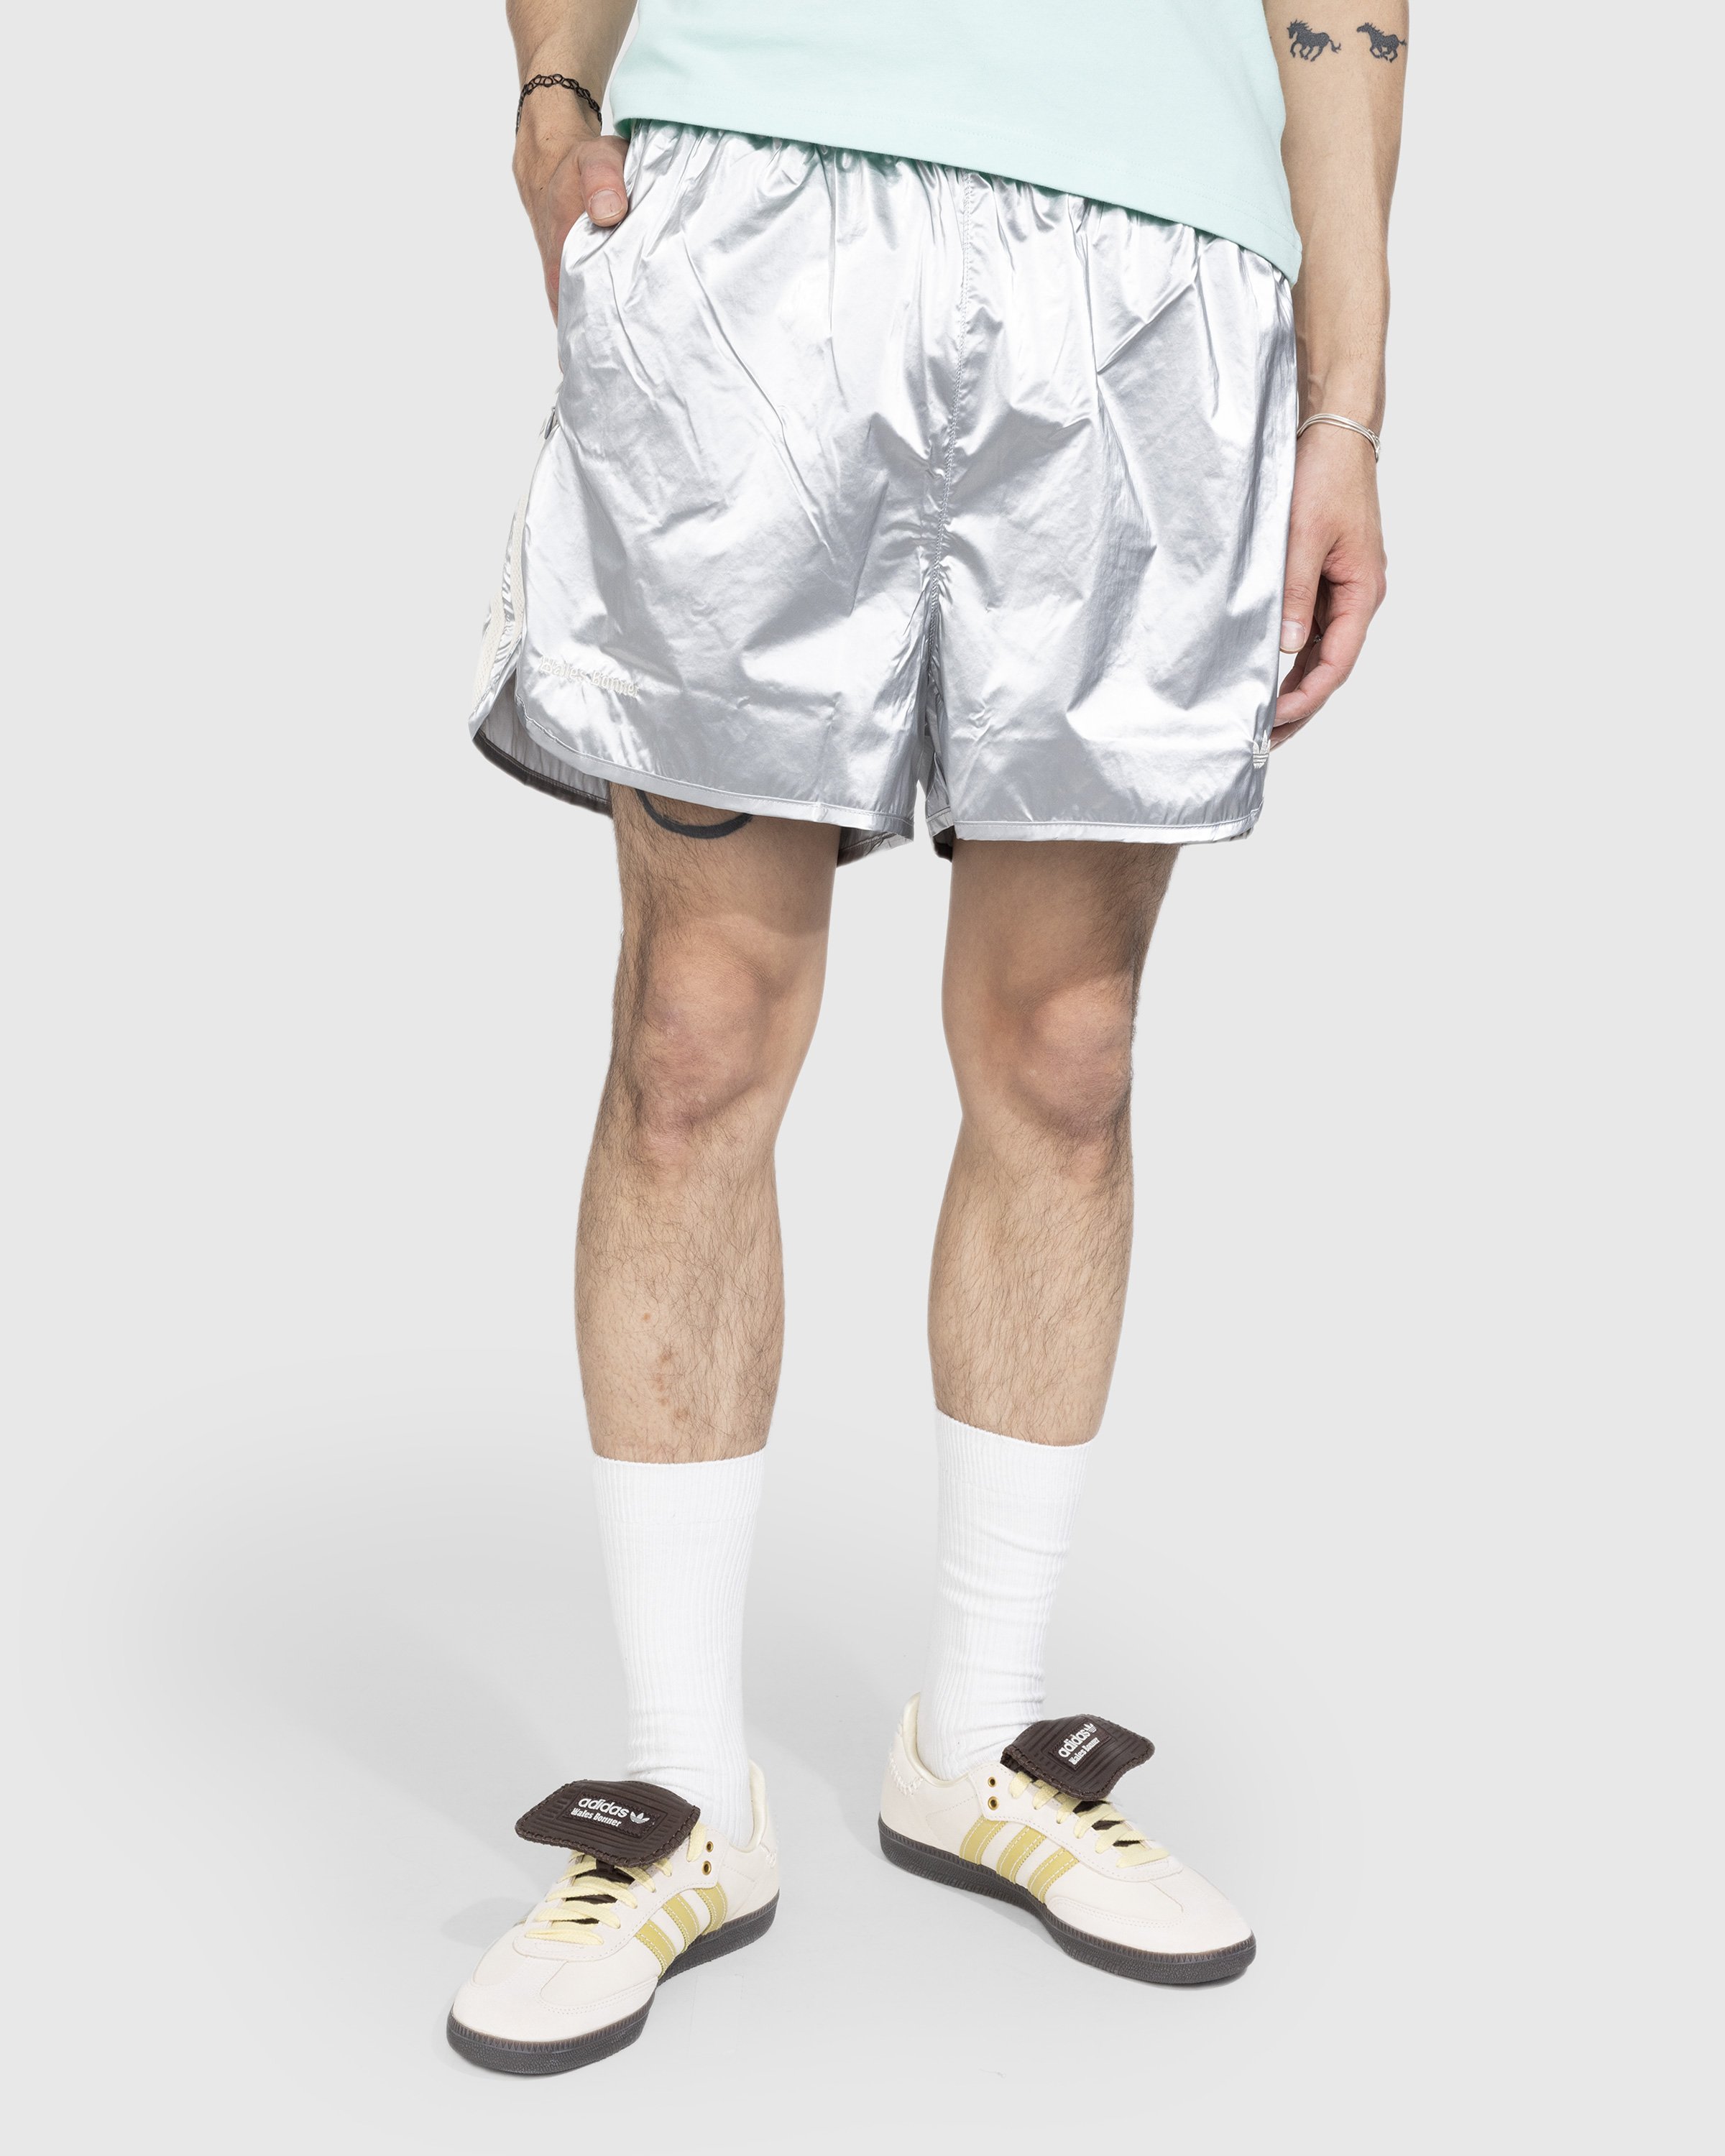 Adidas x Wales Bonner - Metallic Track Shorts Silver - Clothing - Silver - Image 2